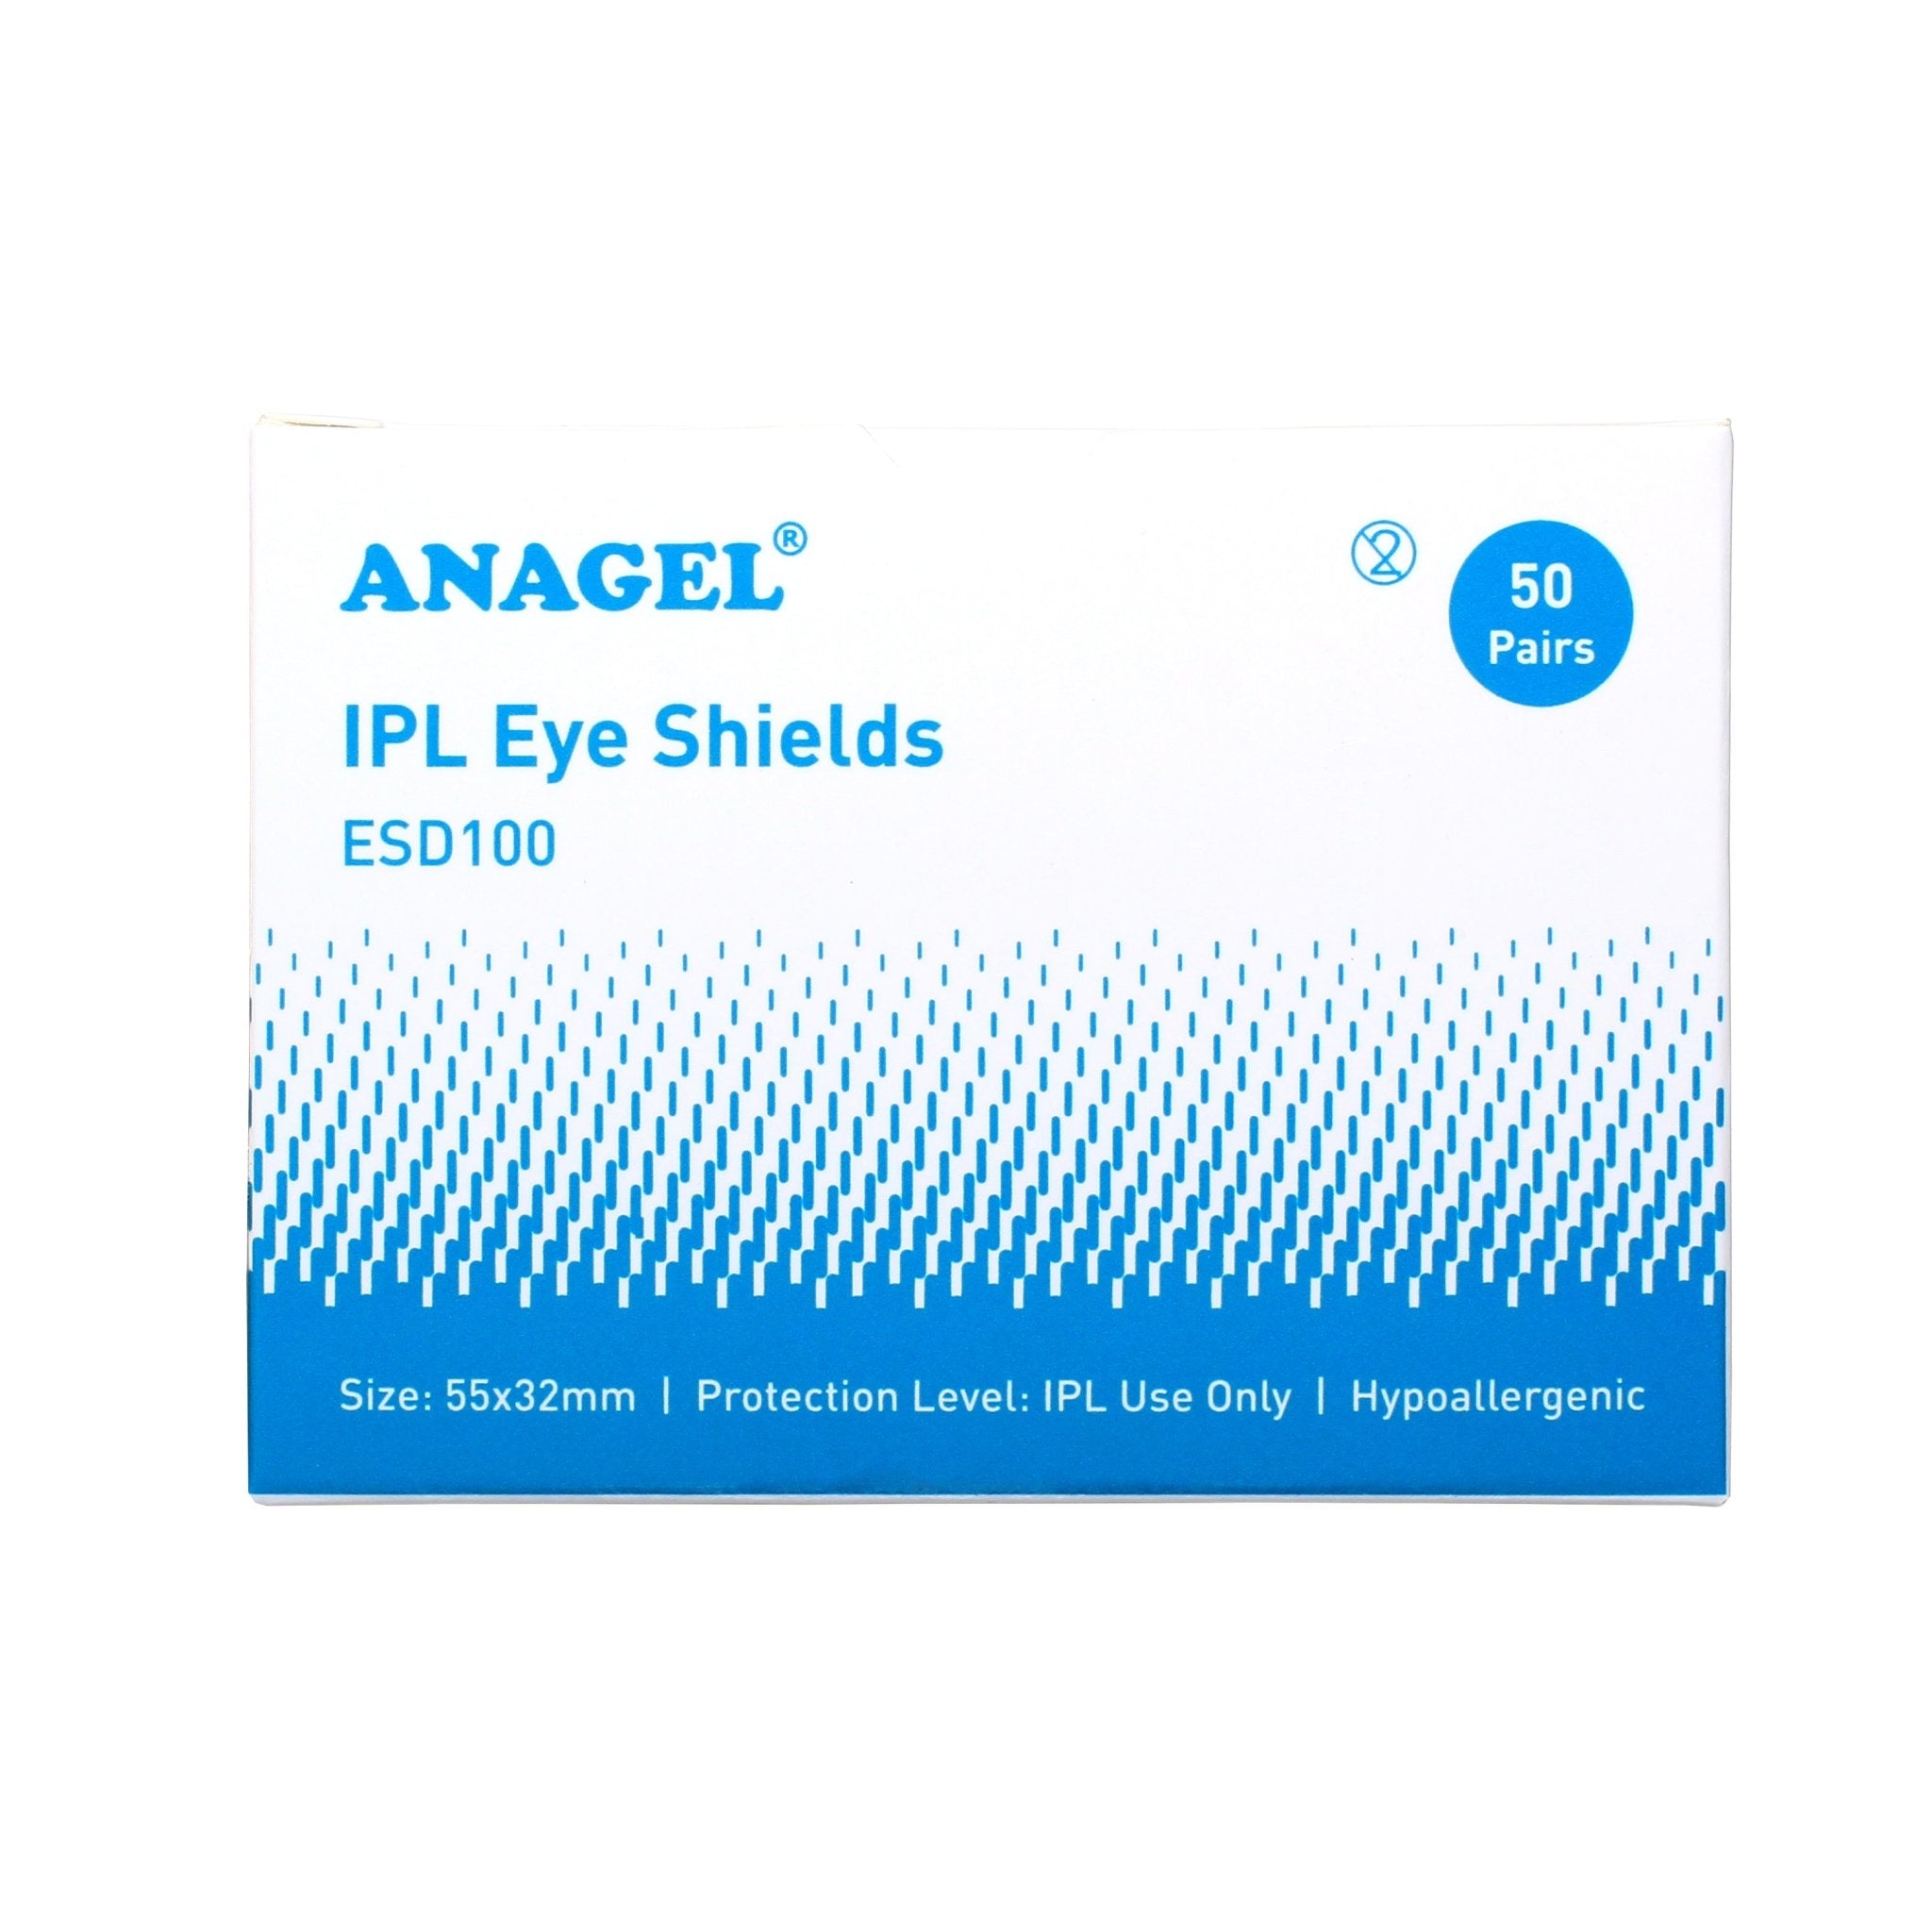 IPL Disposable Eye Shields (Box of 50 pairs) - ANAGEL